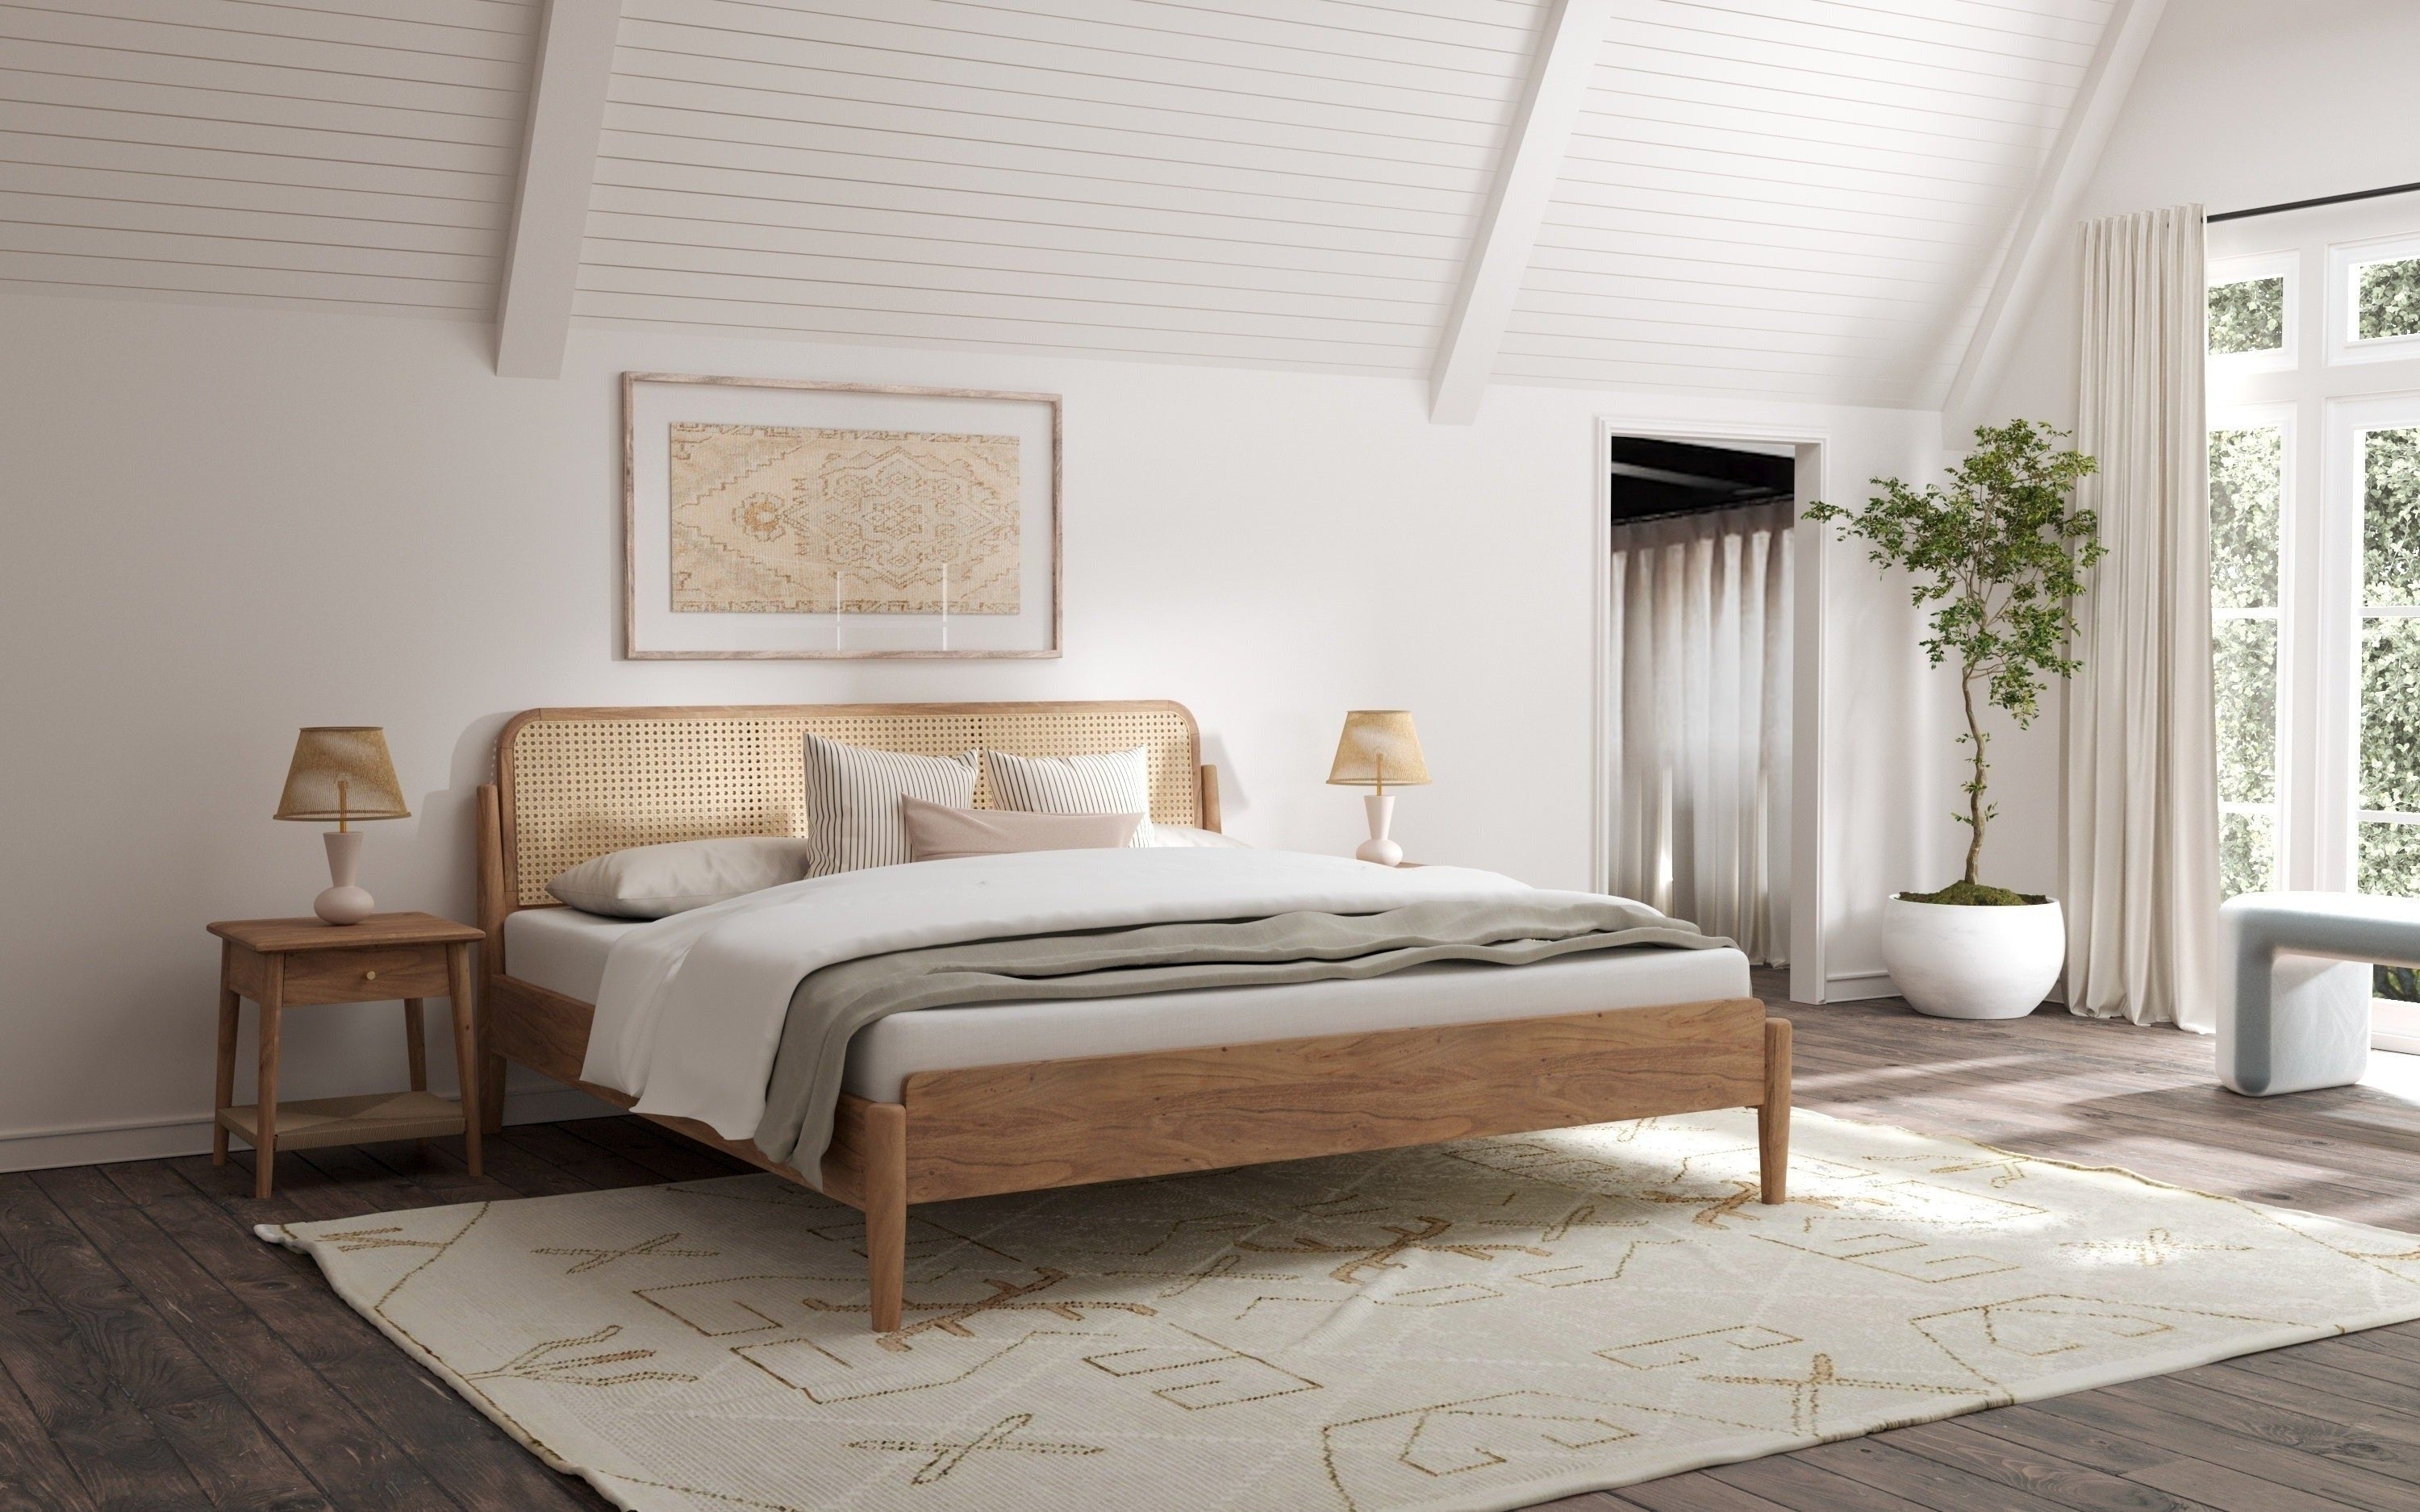 Cozy luxury bedroom with rustic wood elements